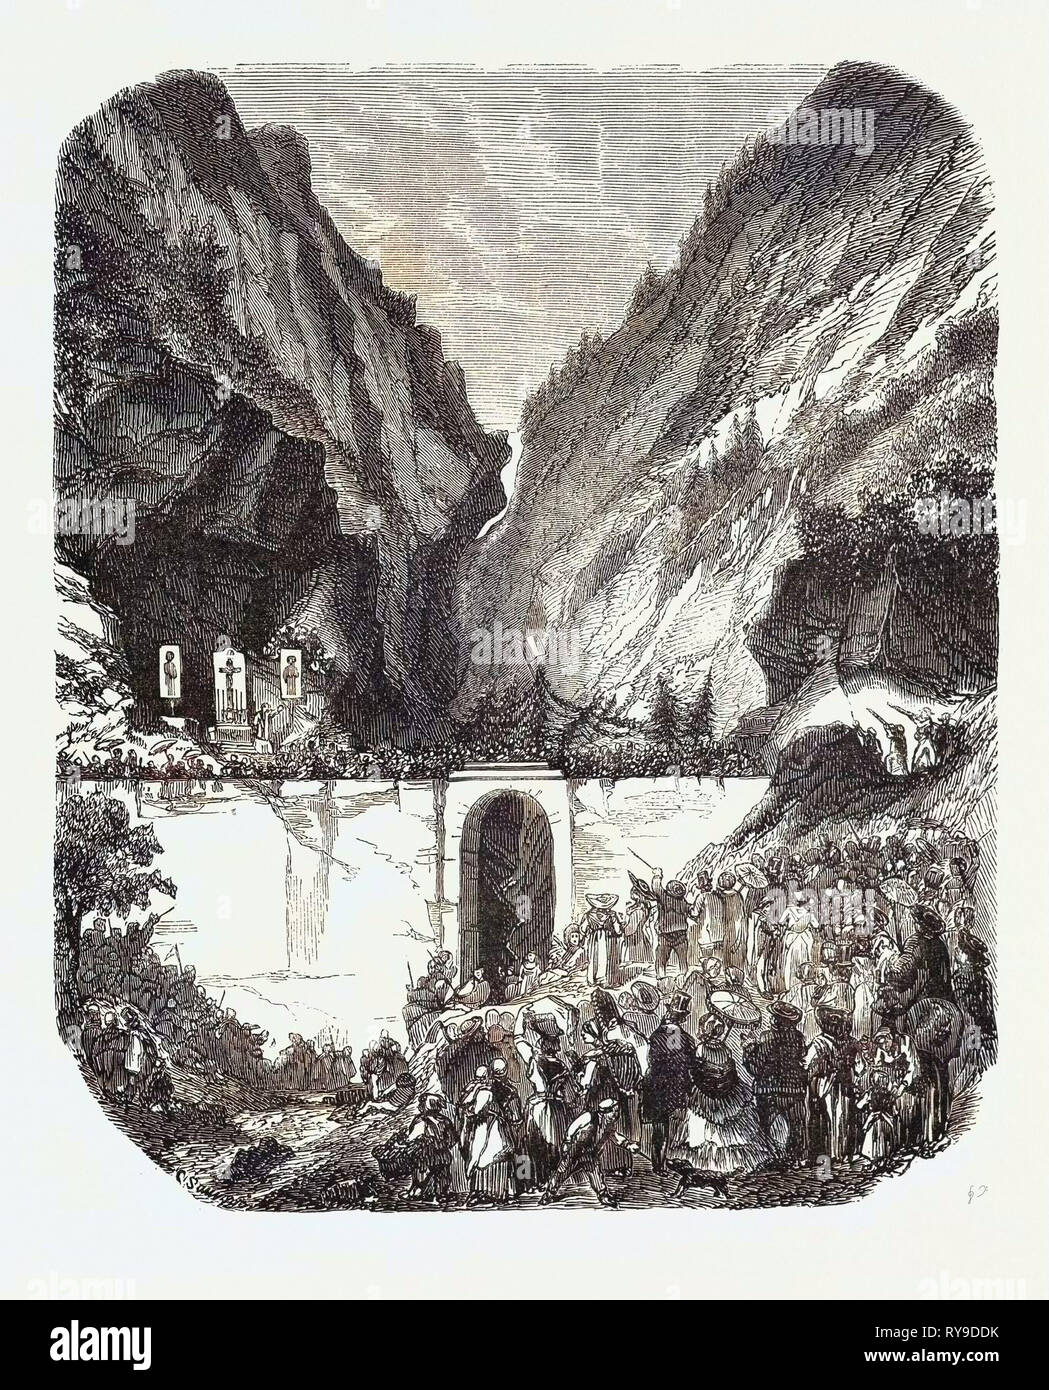 Opening Ceremony of the New Road Bridge Queyras (Hautes-Alpes), France. Engraving 1855 Stock Photo